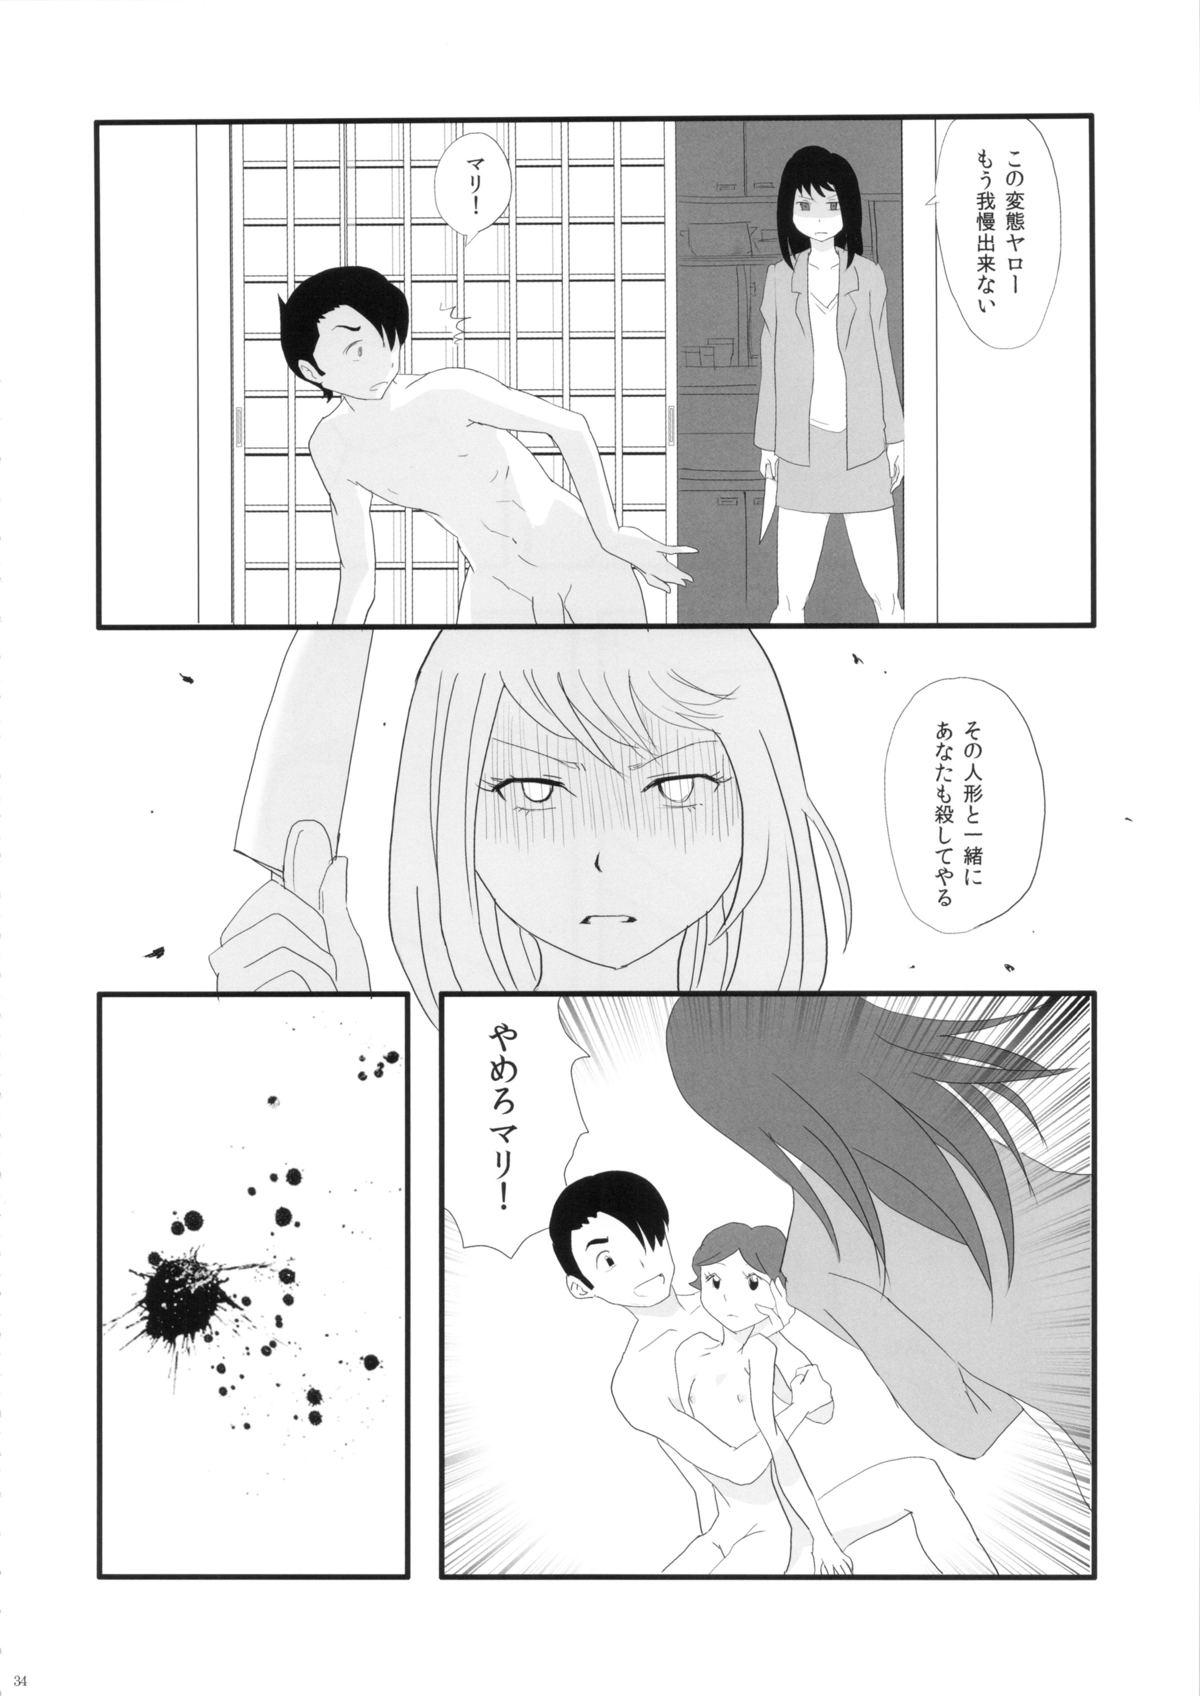 FLOUR2 Tezuka Manga Graffiti 33